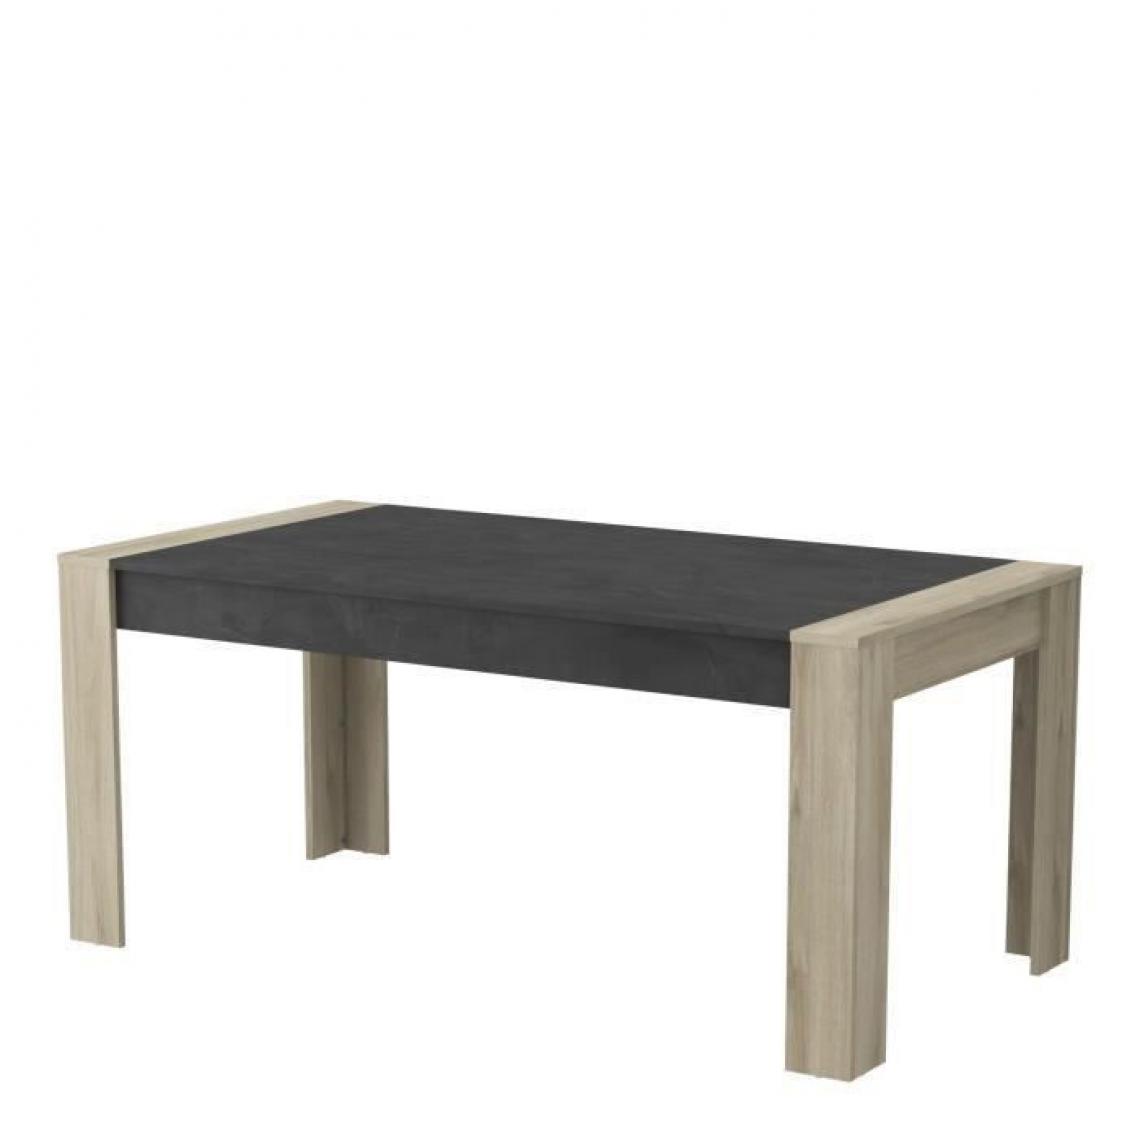 Demeyere - DEMEYERE - table 90x170 - décor chêne brossé - l 170xp 90xh 77, 1 cm - Sheffield - Tables à manger